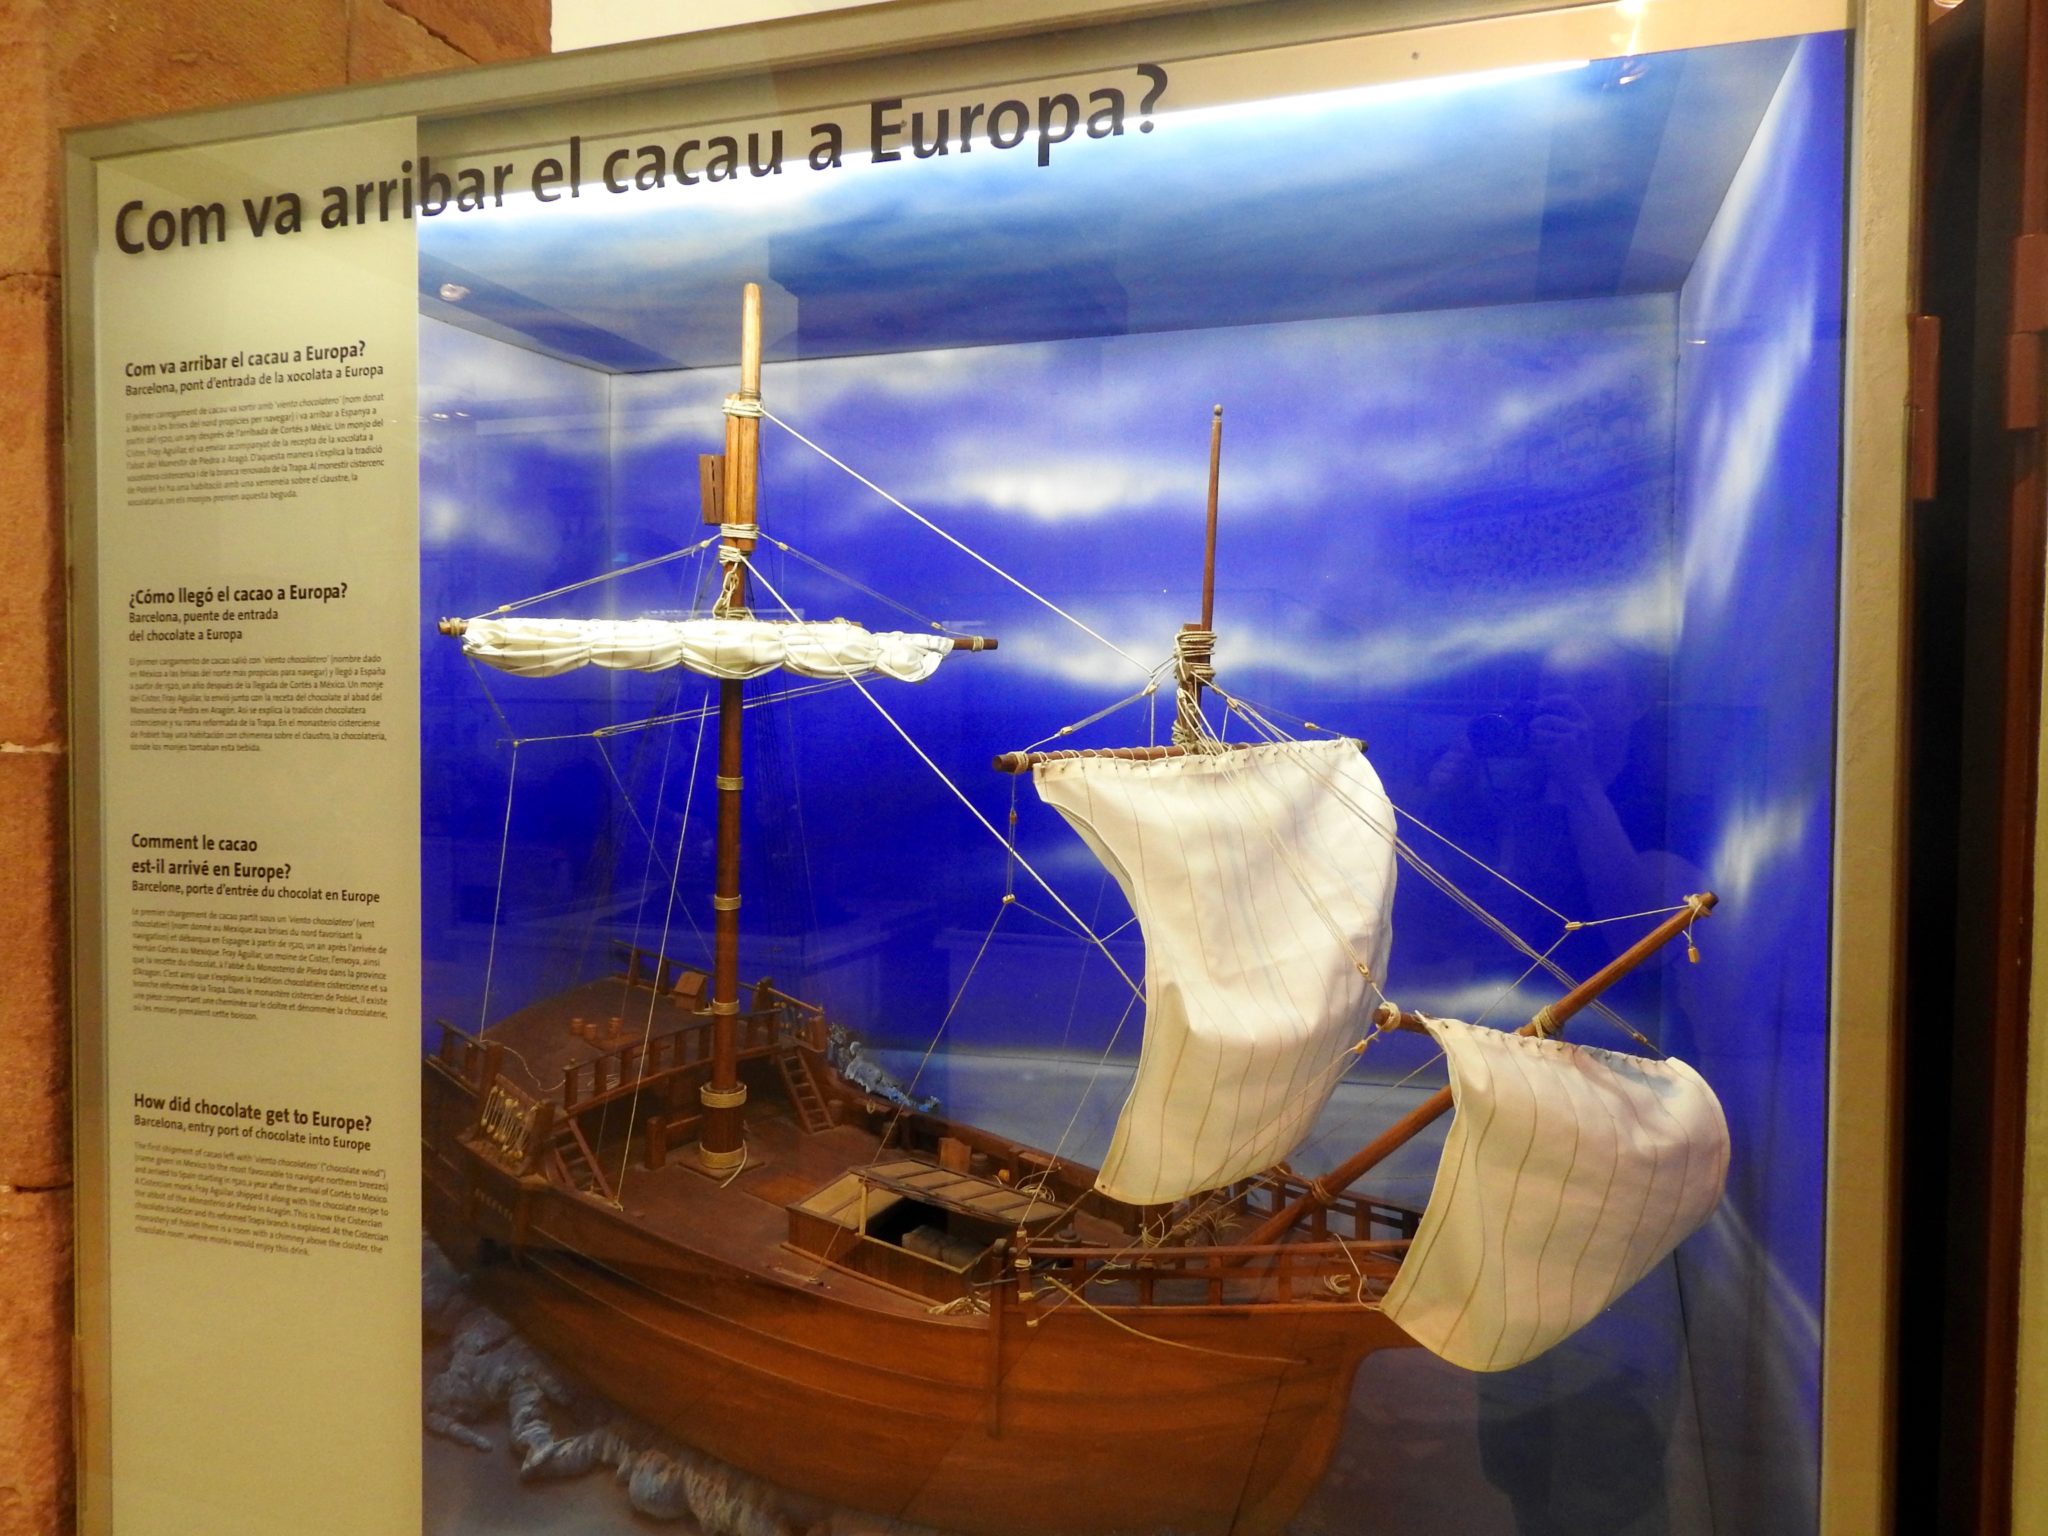 Chocolate museum exhibit showing Spanish ship